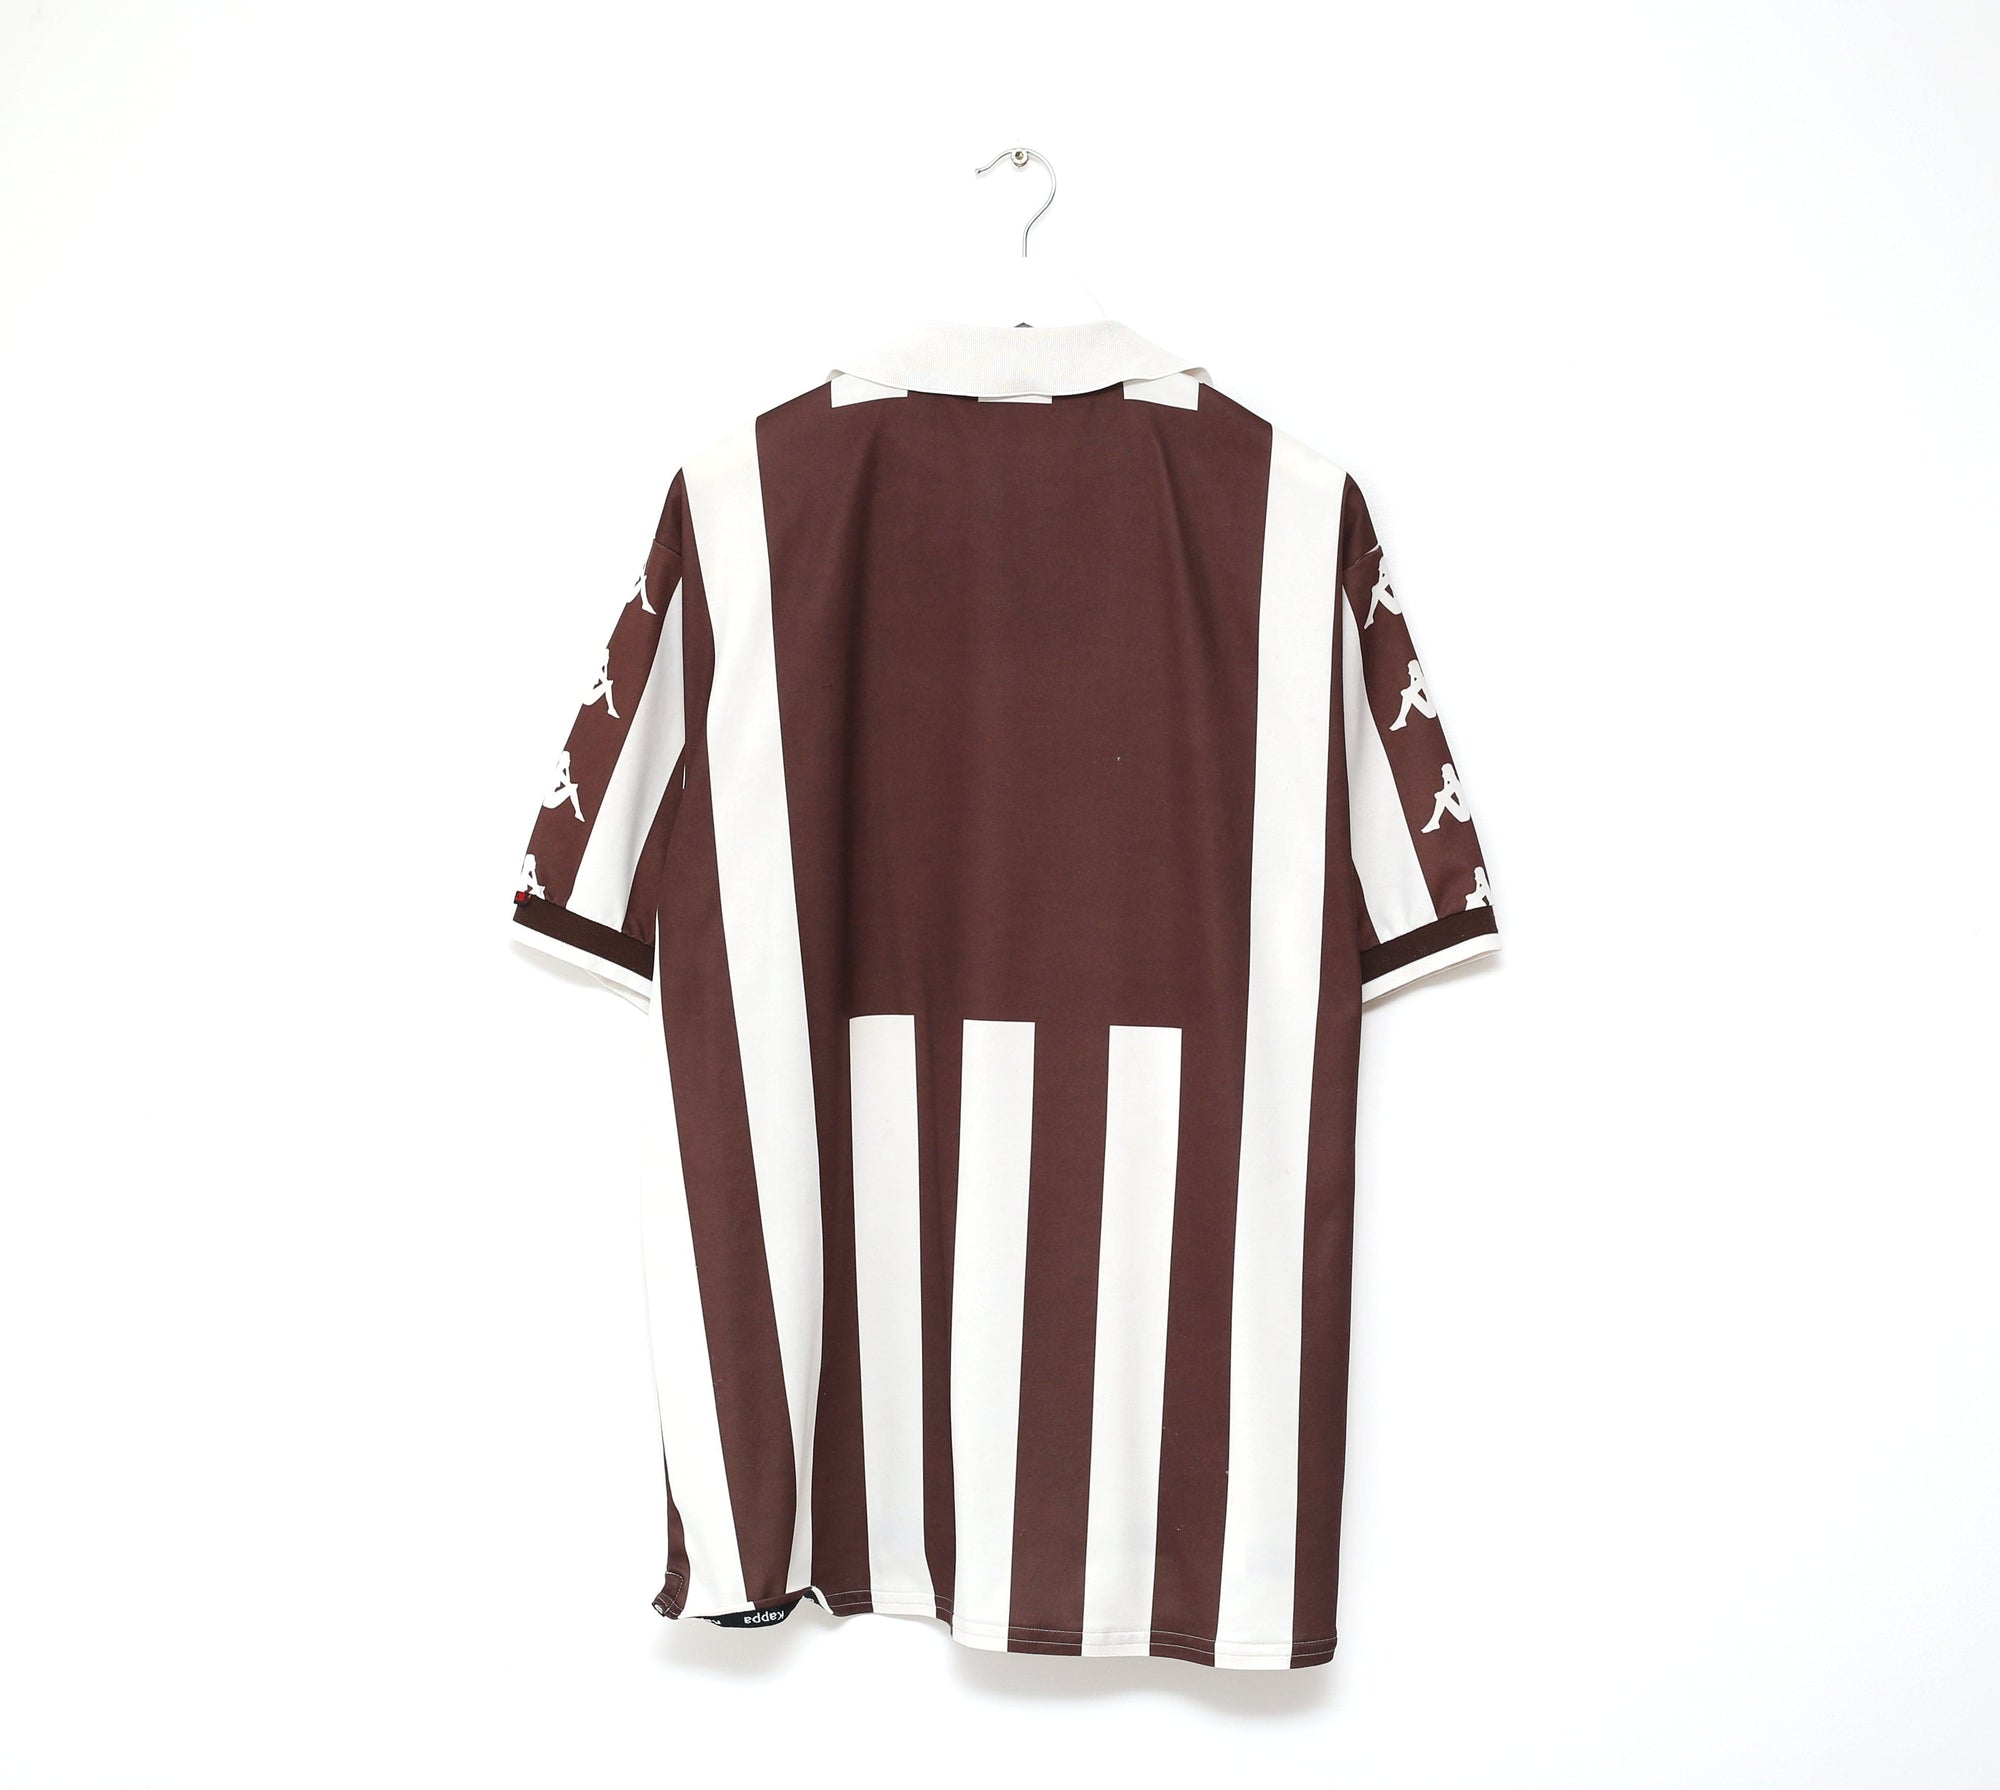 2000/01 ST PAULI Vintage Kappa Home Football Shirt (XL)